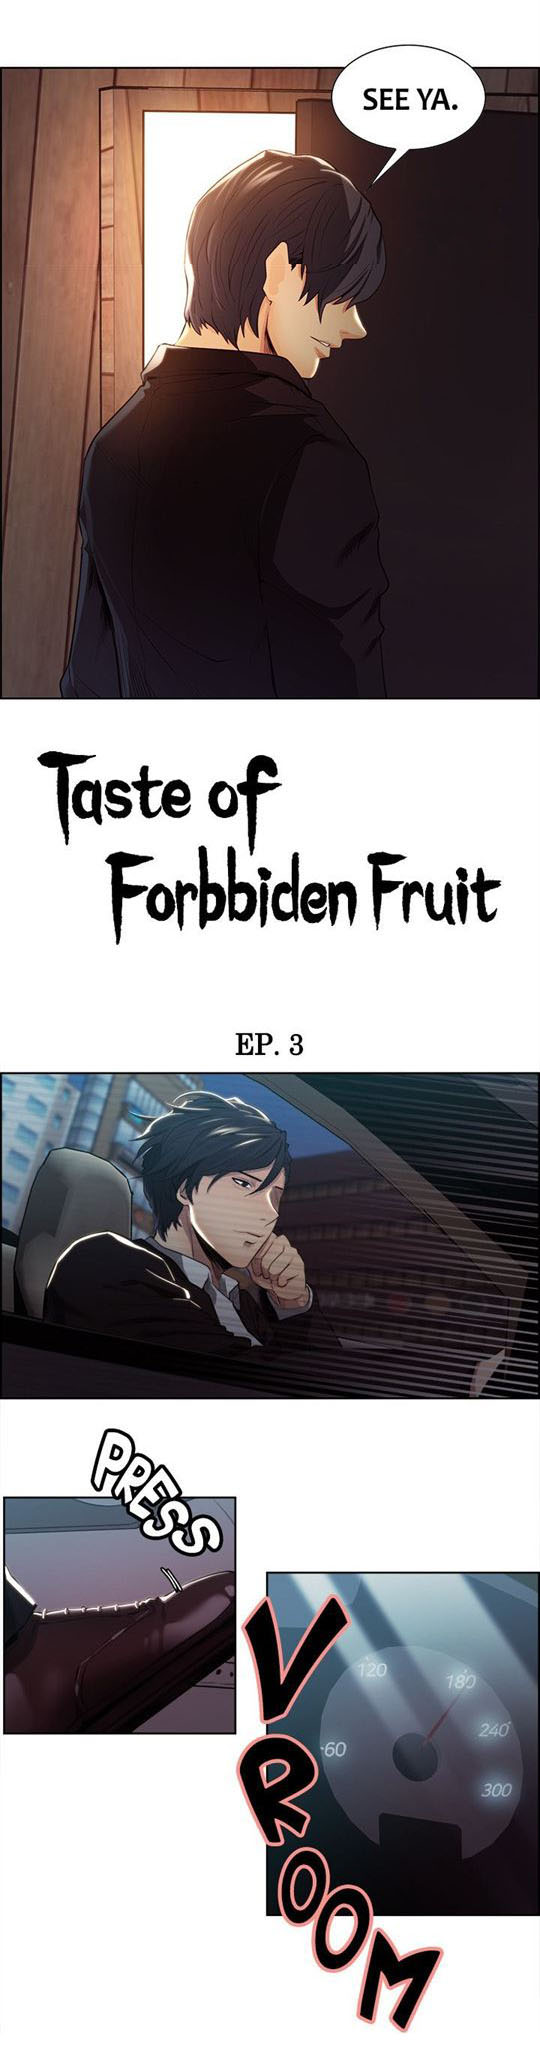 [Serious] Taste of Forbbiden Fruit Ch.4/24